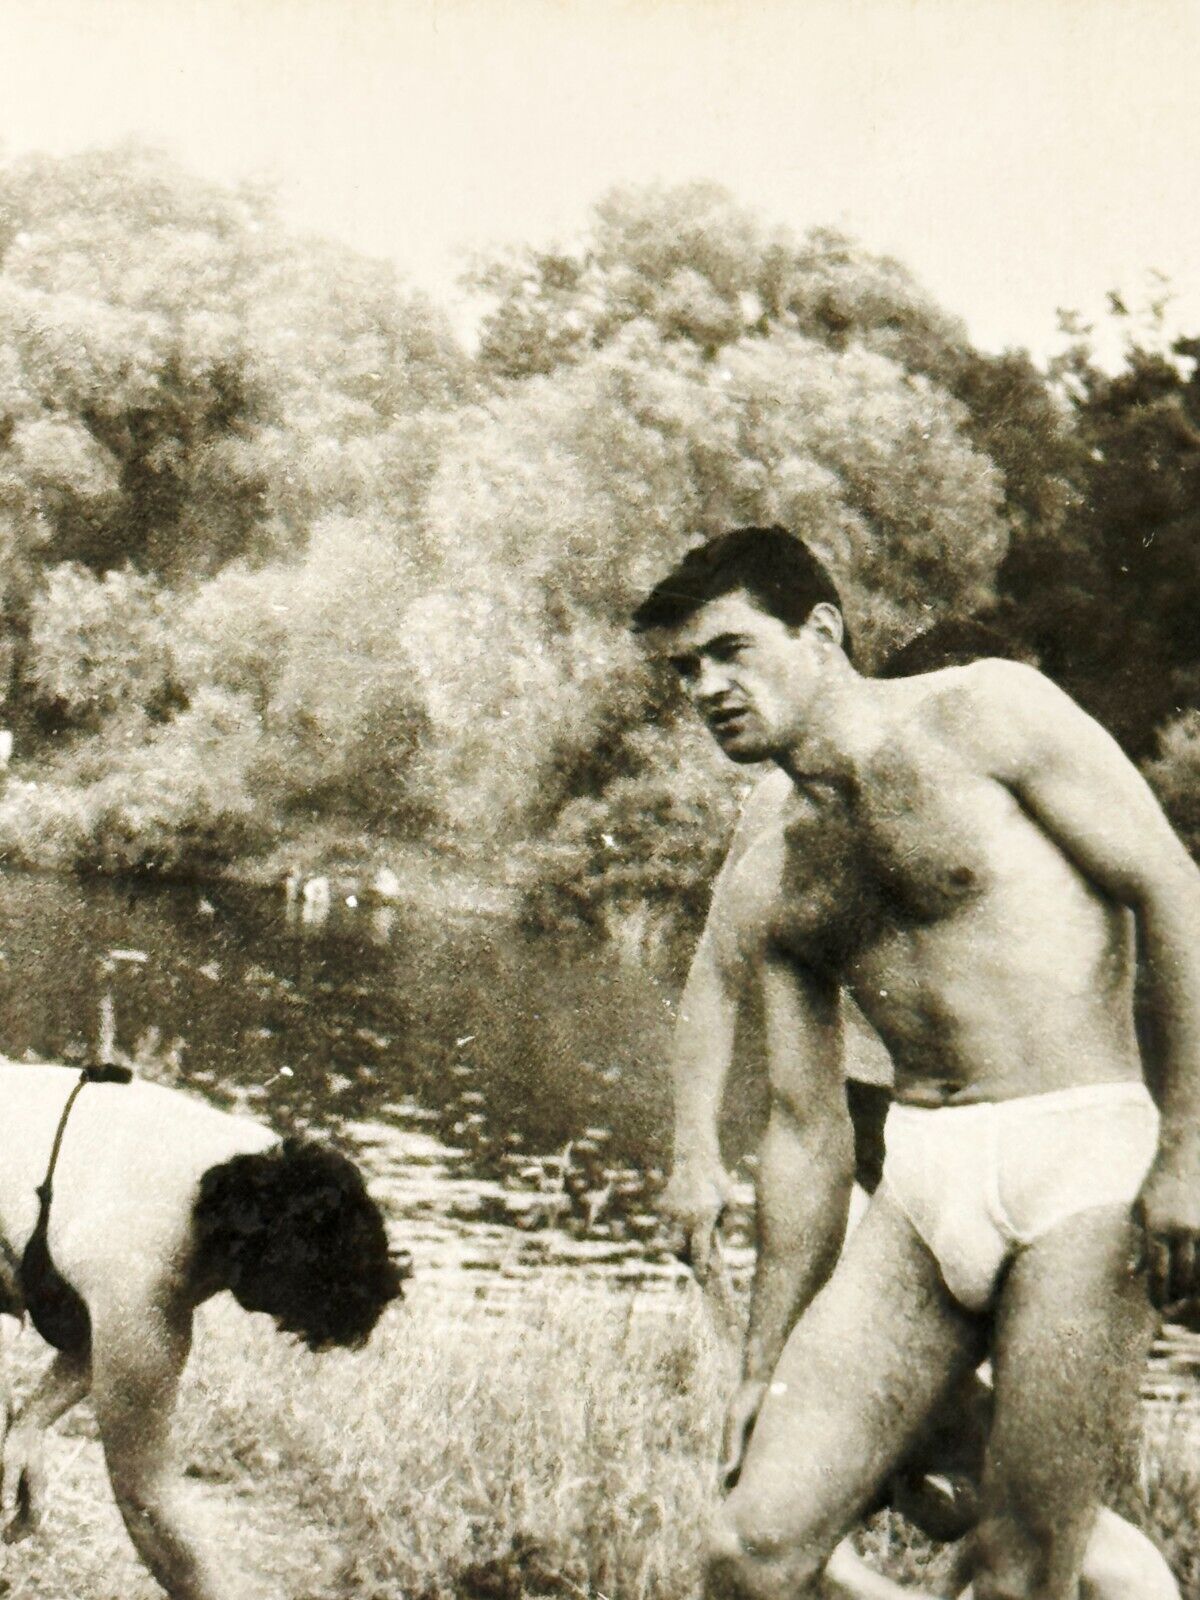 1970s Handsome Men Muscular Beefcake Guy White Swimming Trunks Gay Int B&W Photo